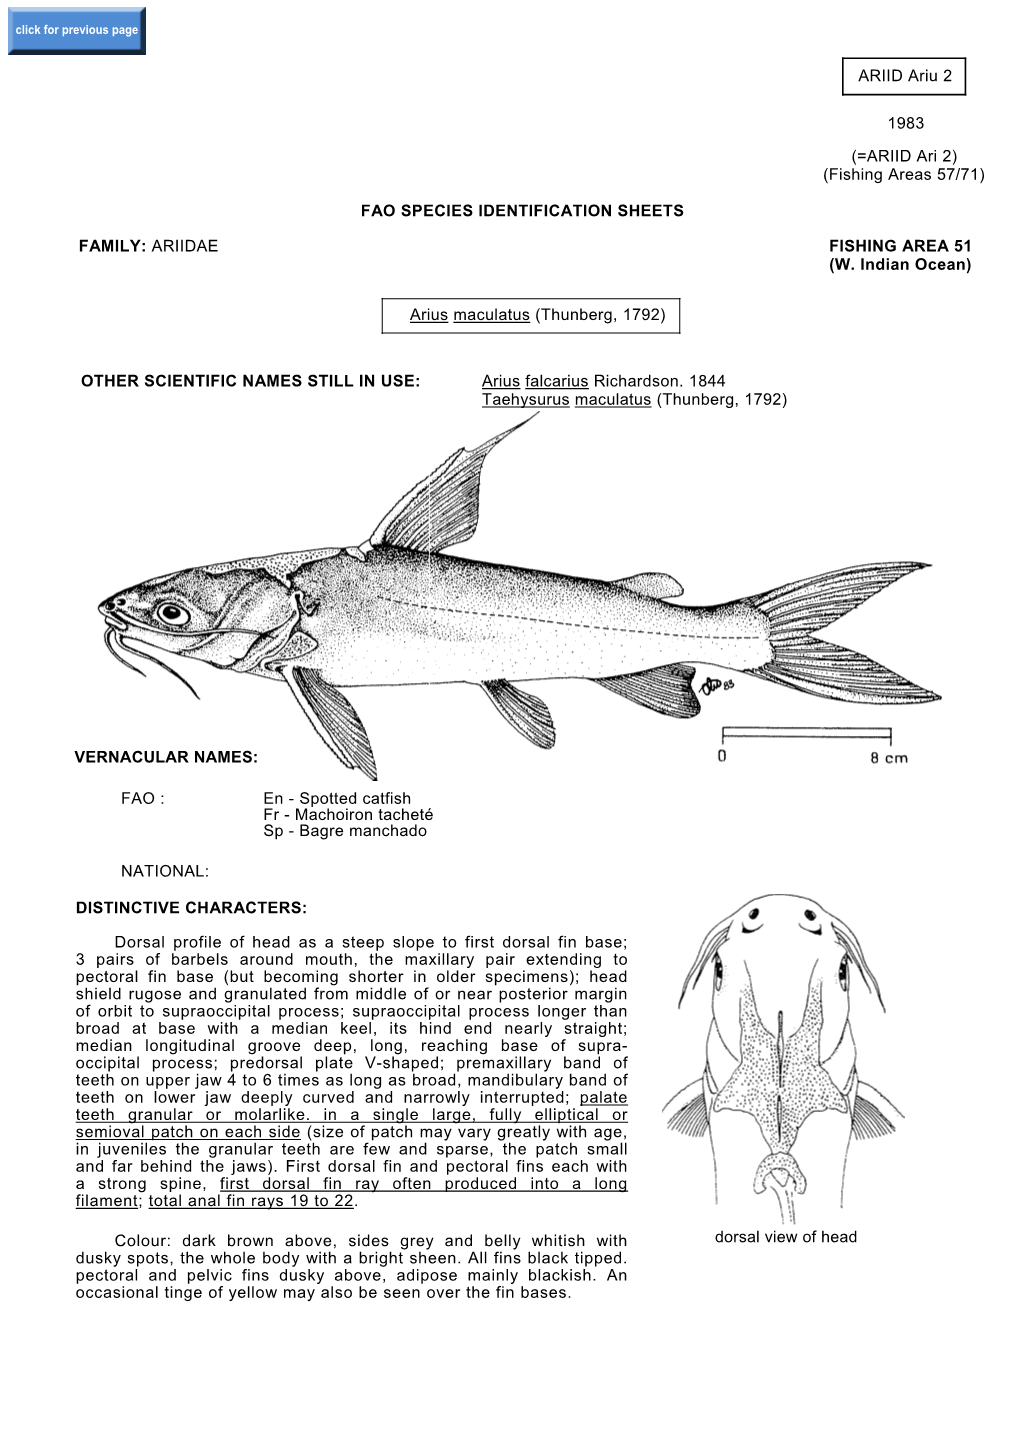 ARIID Ariu 2 1983 (=ARIID Ari 2) (Fishing Areas 57/71) FAO SPECIES IDENTIFICATION SHEETS FAMILY: ARIIDAE FISHING AREA 51 (W